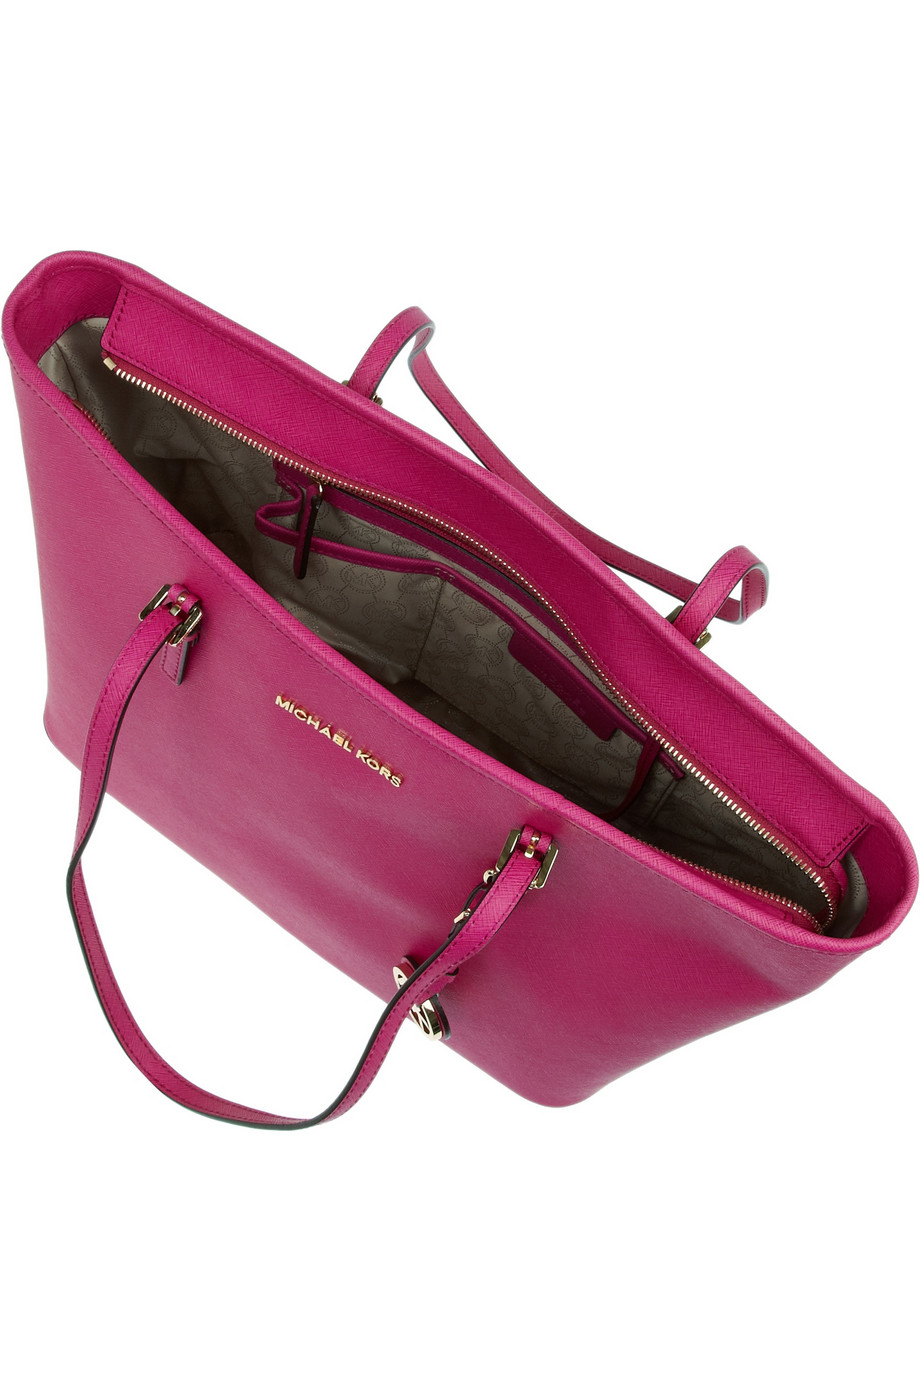 Michael Kors Pink Saffiano Cross-Stitch Jet Set Travel Tote Bag, Women's